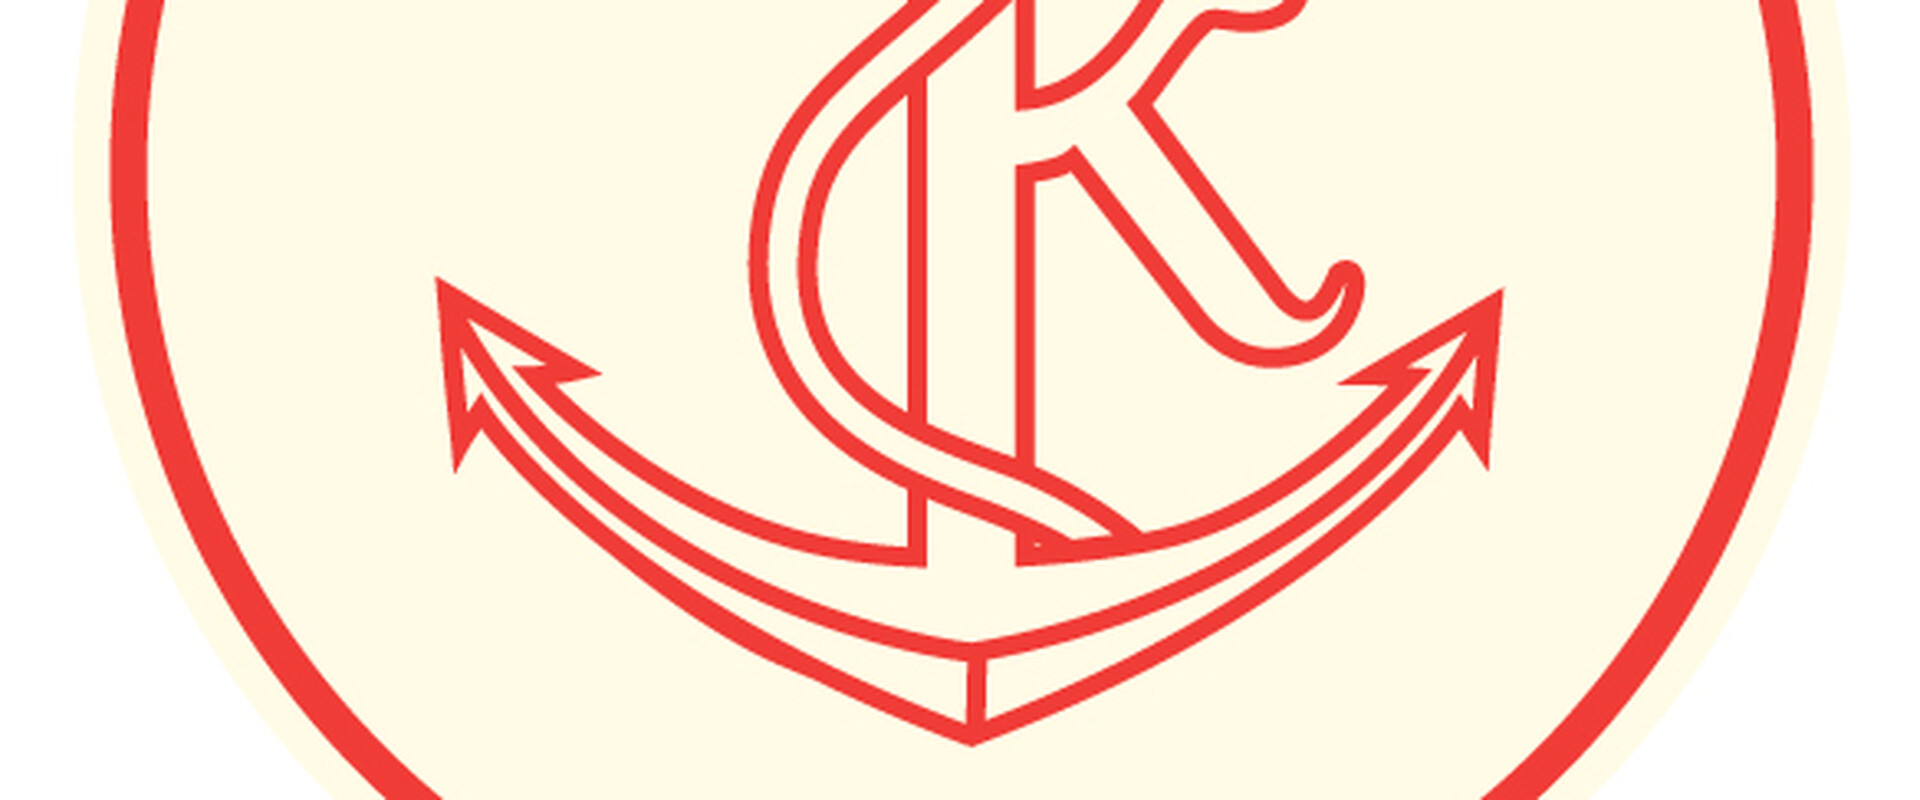 Kristiinankaupunki logo pun nega rgb8